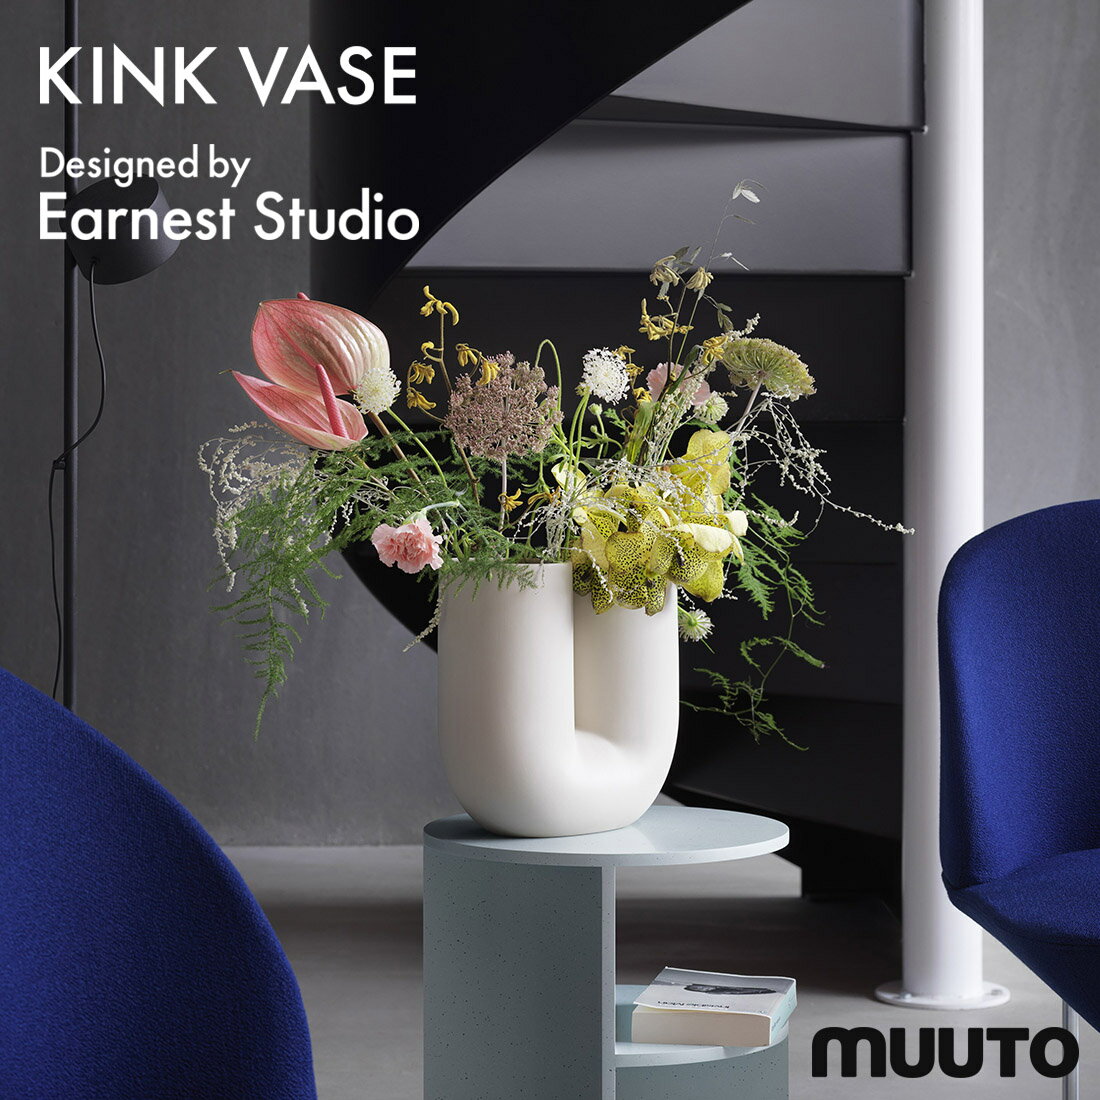 Muuto ムート KINK VASE キンクベース KINKVASE Earnest Studio アーネストスタジオ 花瓶 フラワーベース デンマーク 北欧